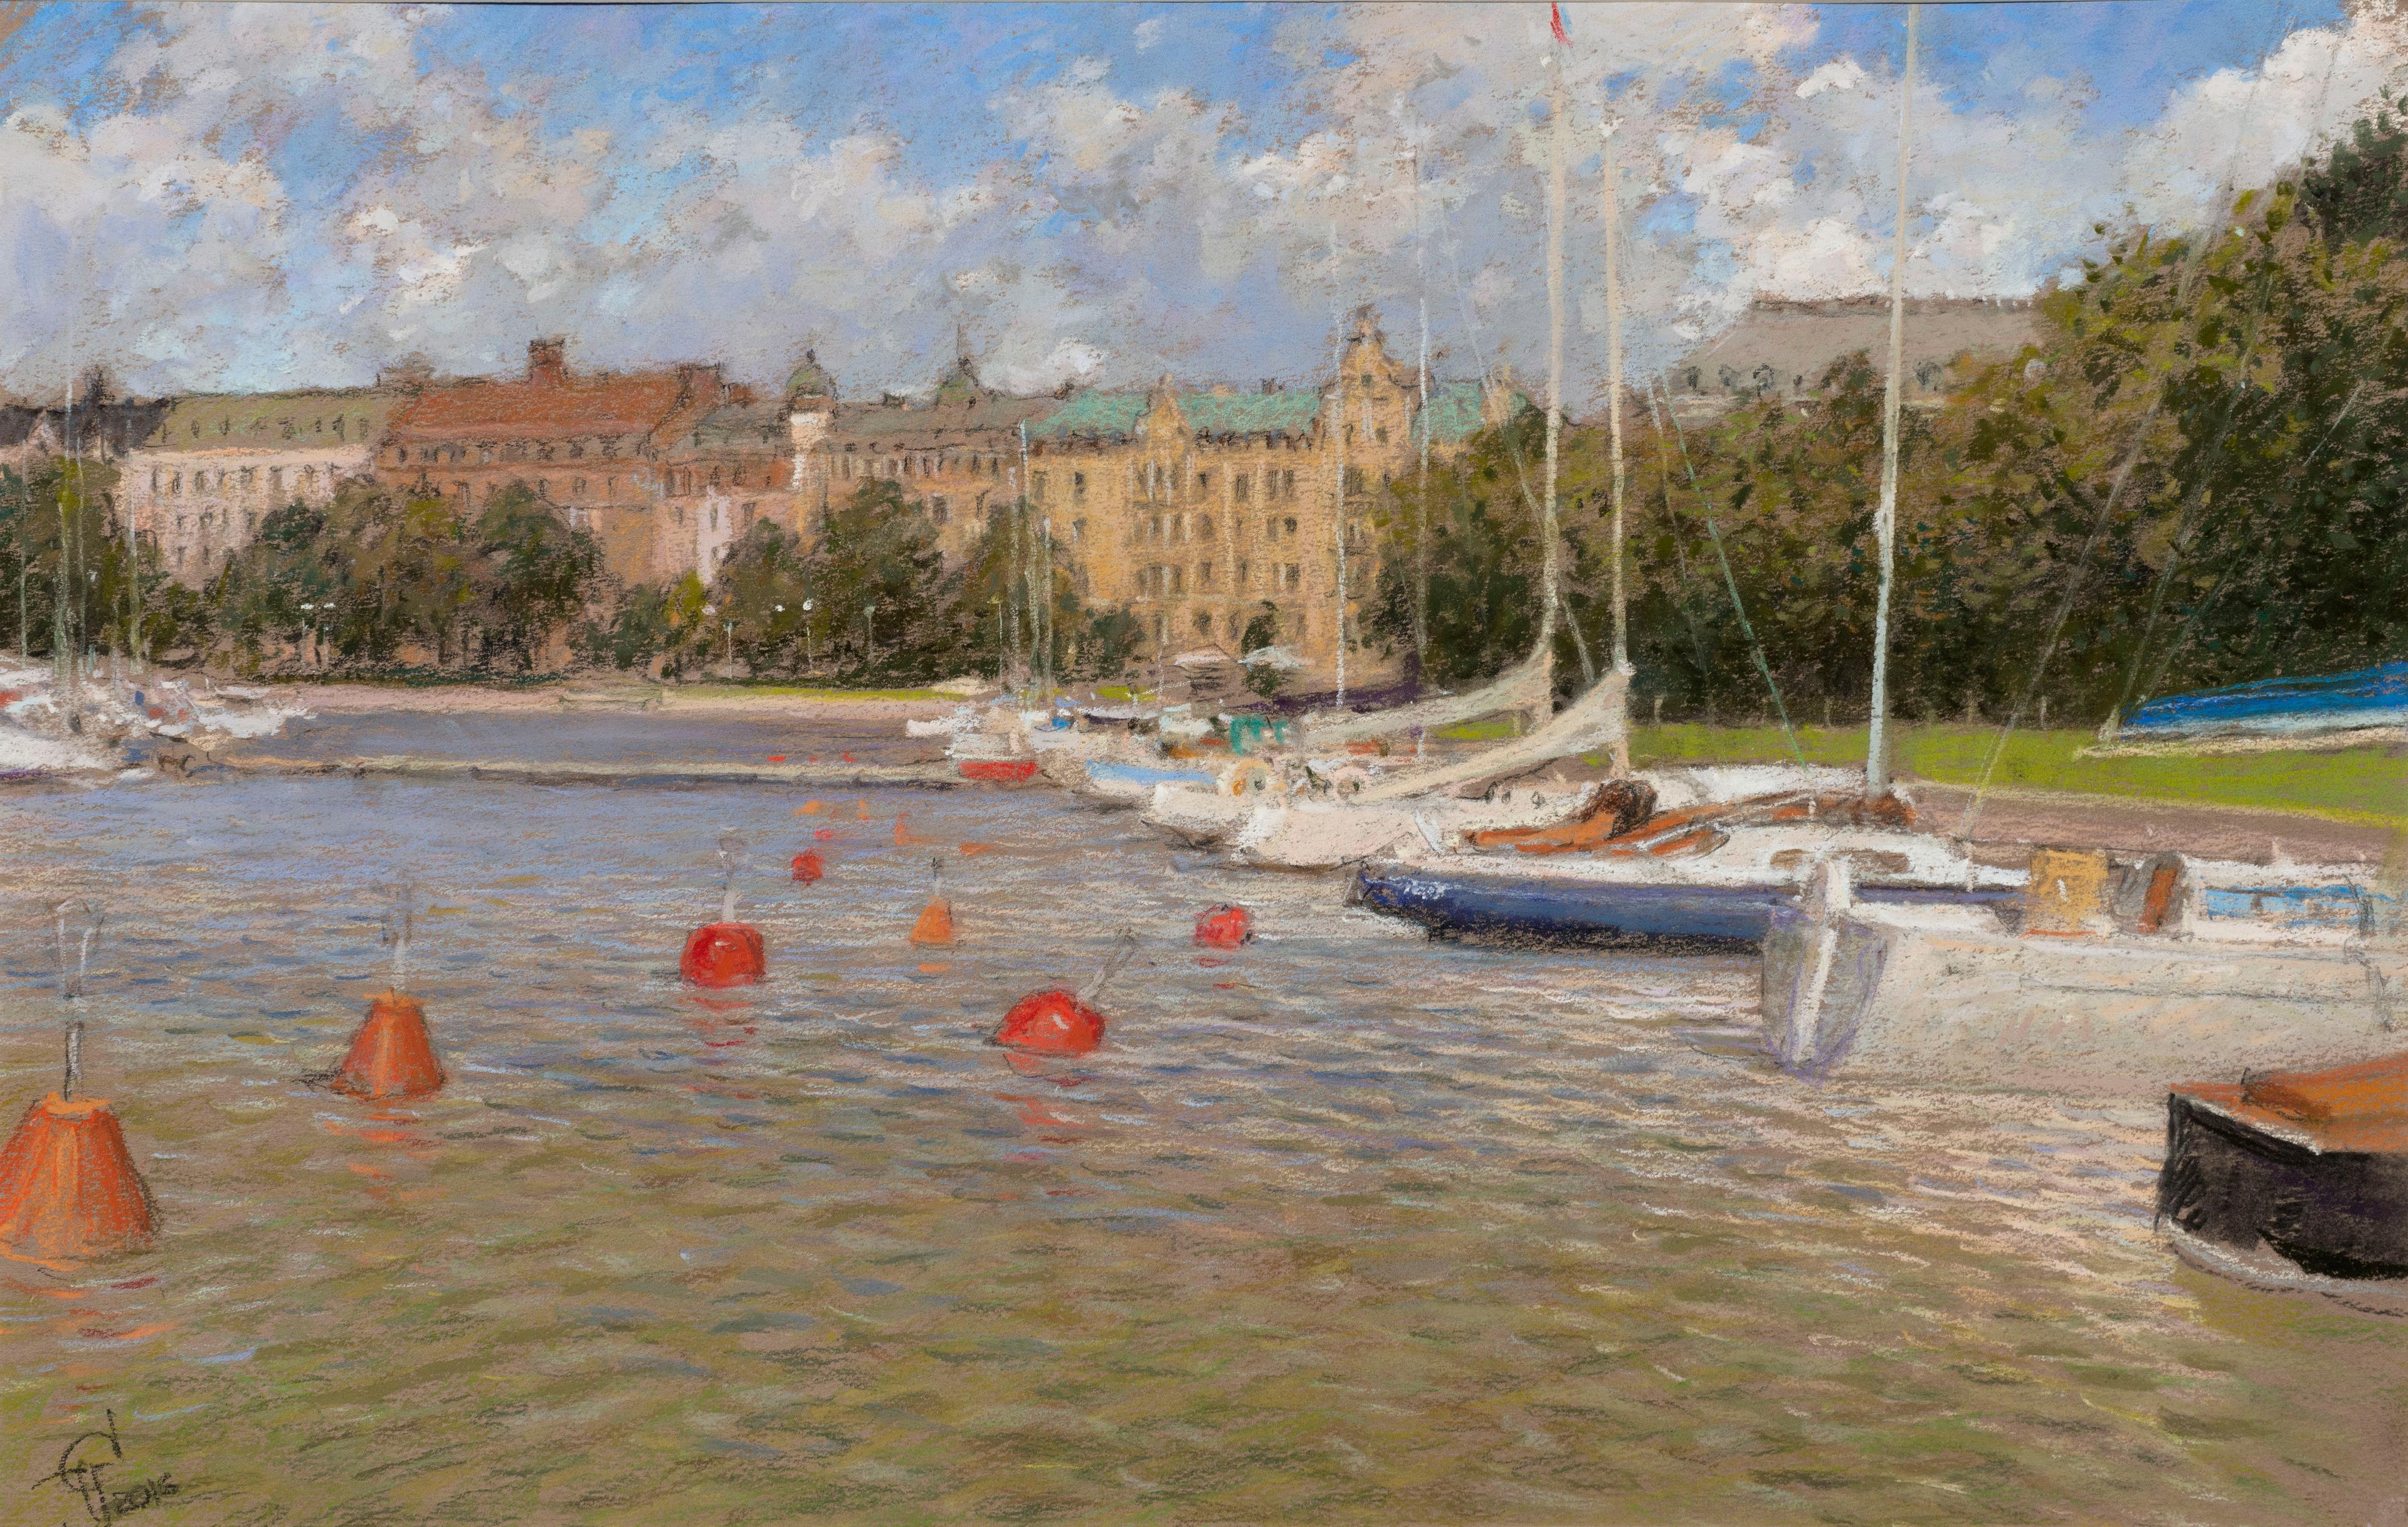 Helsinki. Original modern art painting